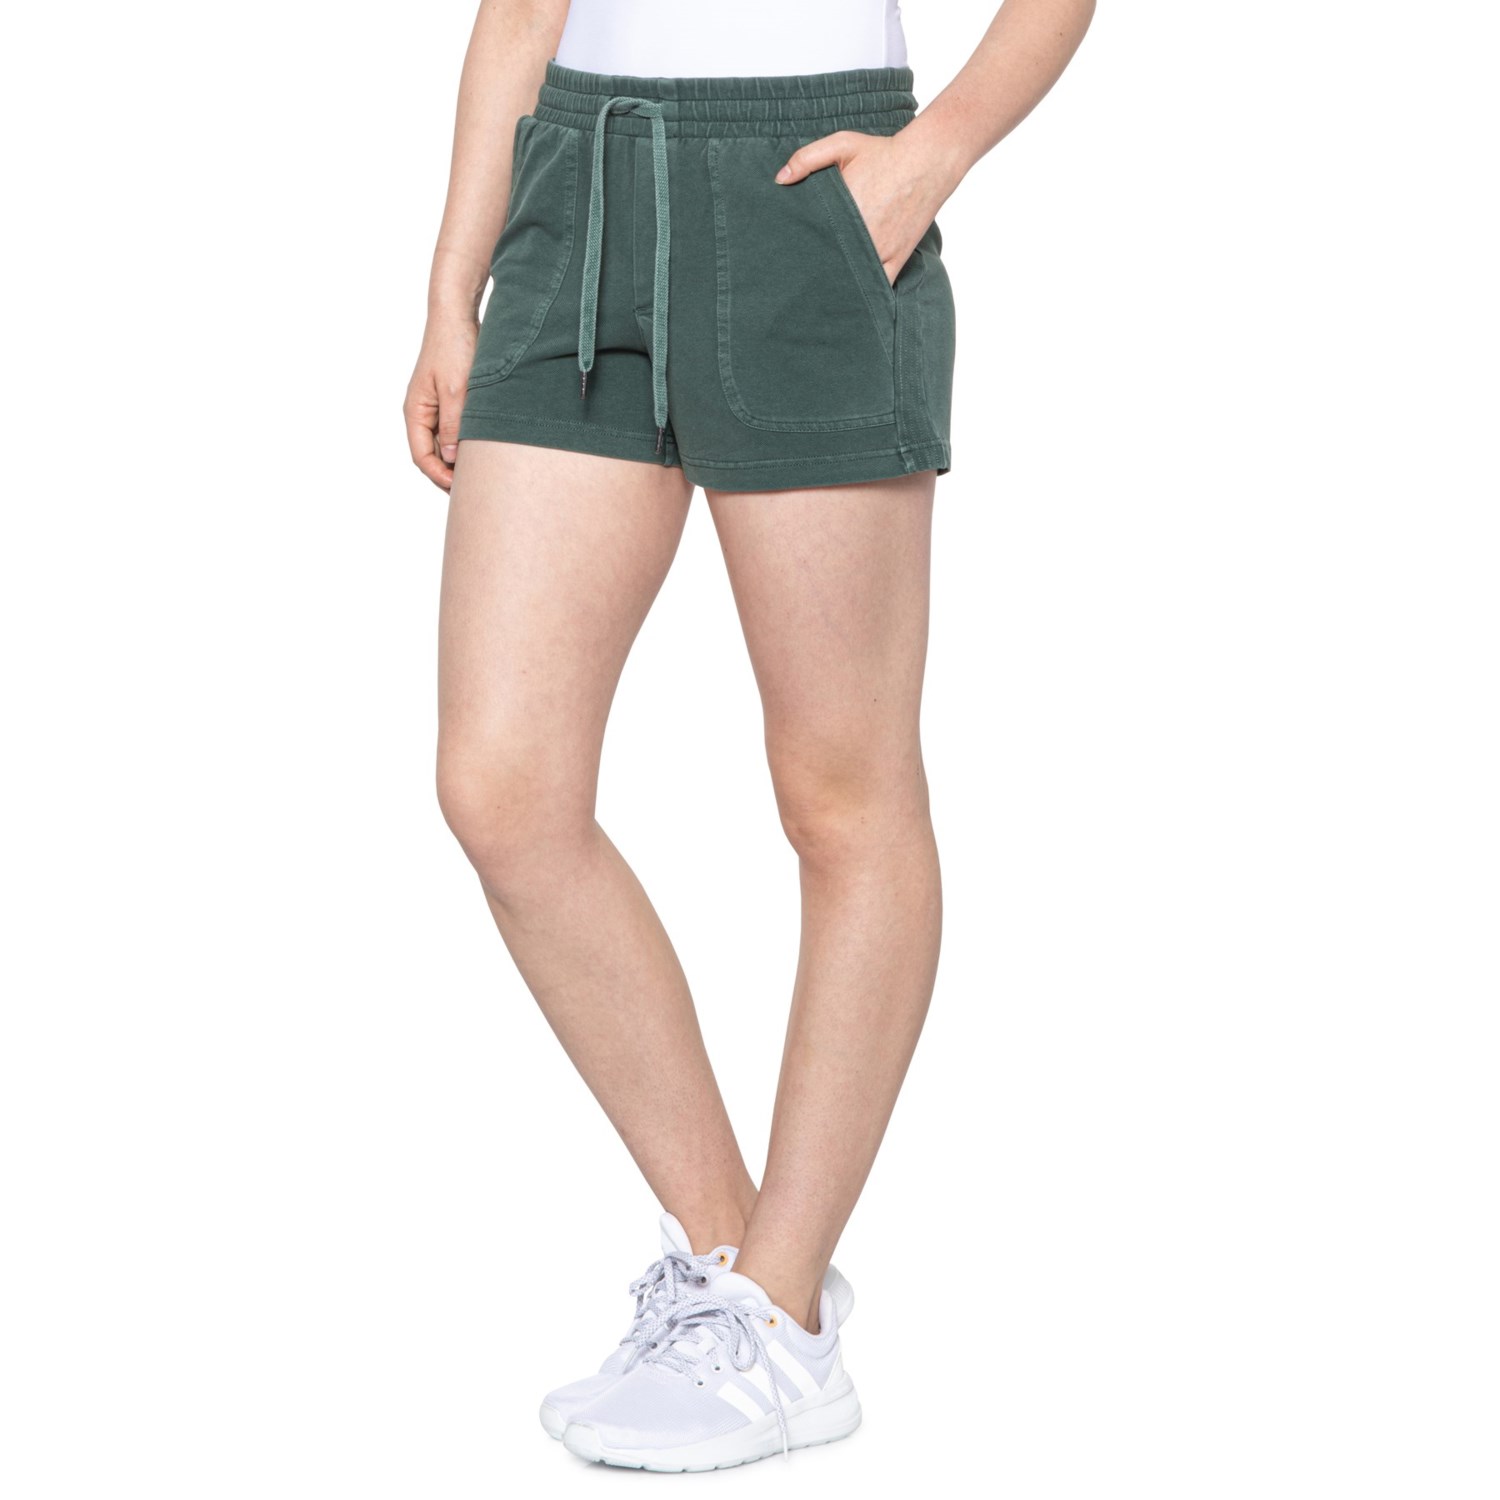 () eChN[WOJpj[ K[g_C cC V[c Telluride Clothing Company Garment-Dyed Twill Shorts Forest Green